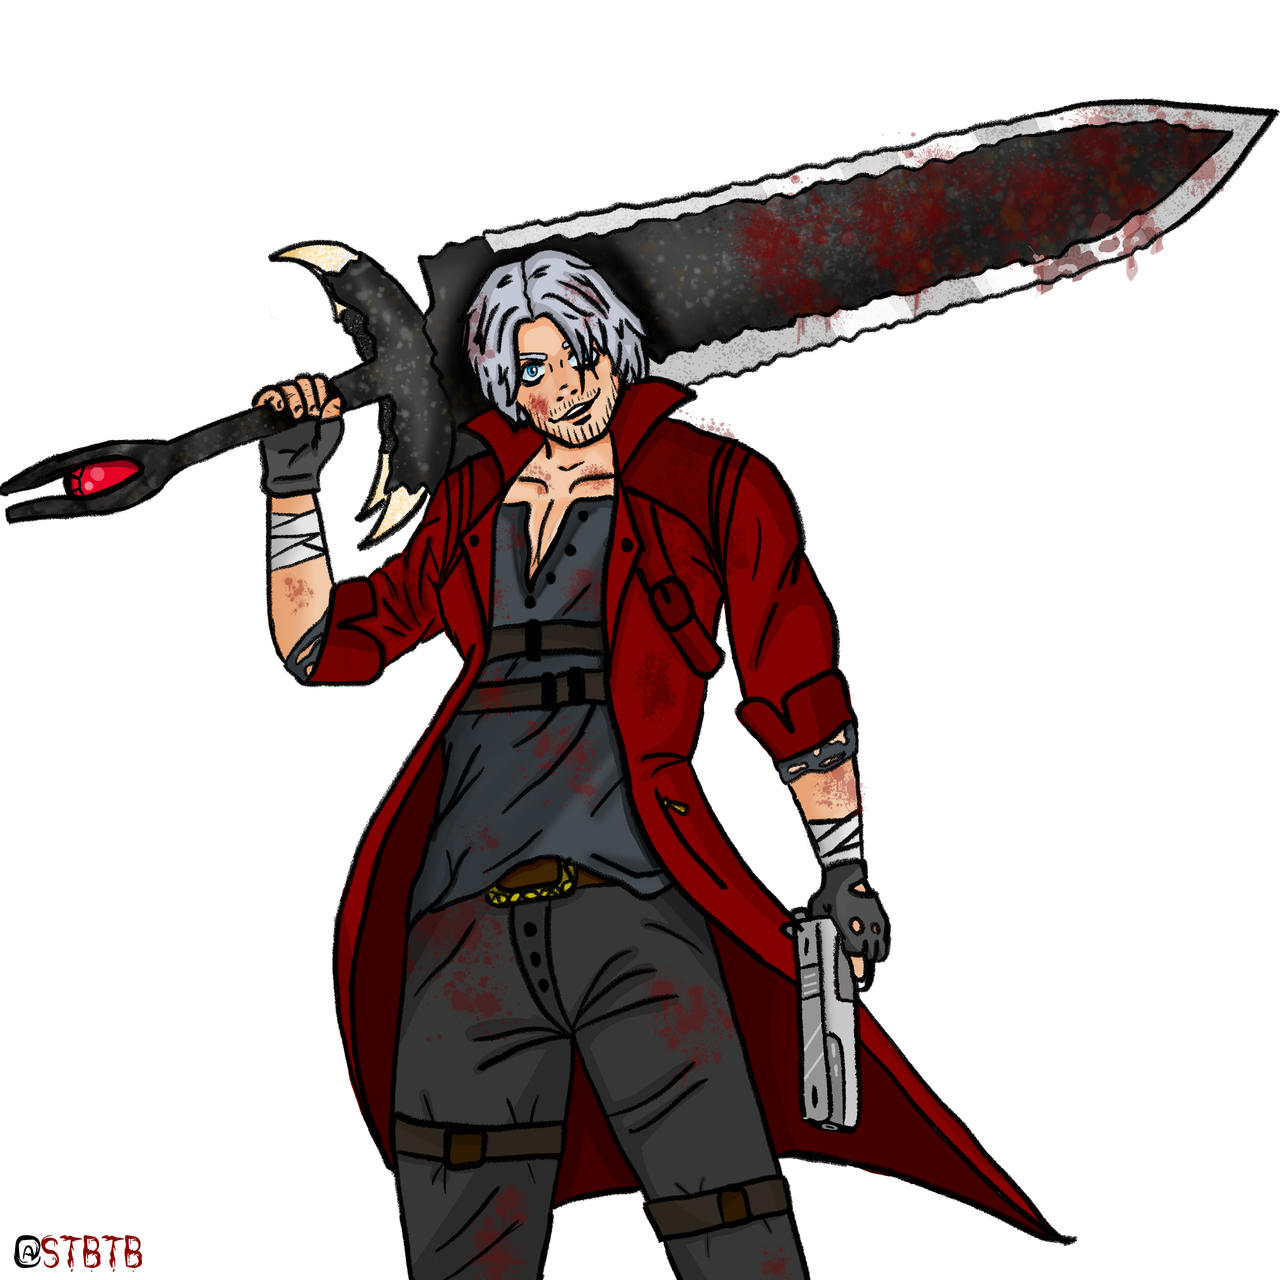 Dante Anime Devil may cry by Fubuki-Arts on DeviantArt